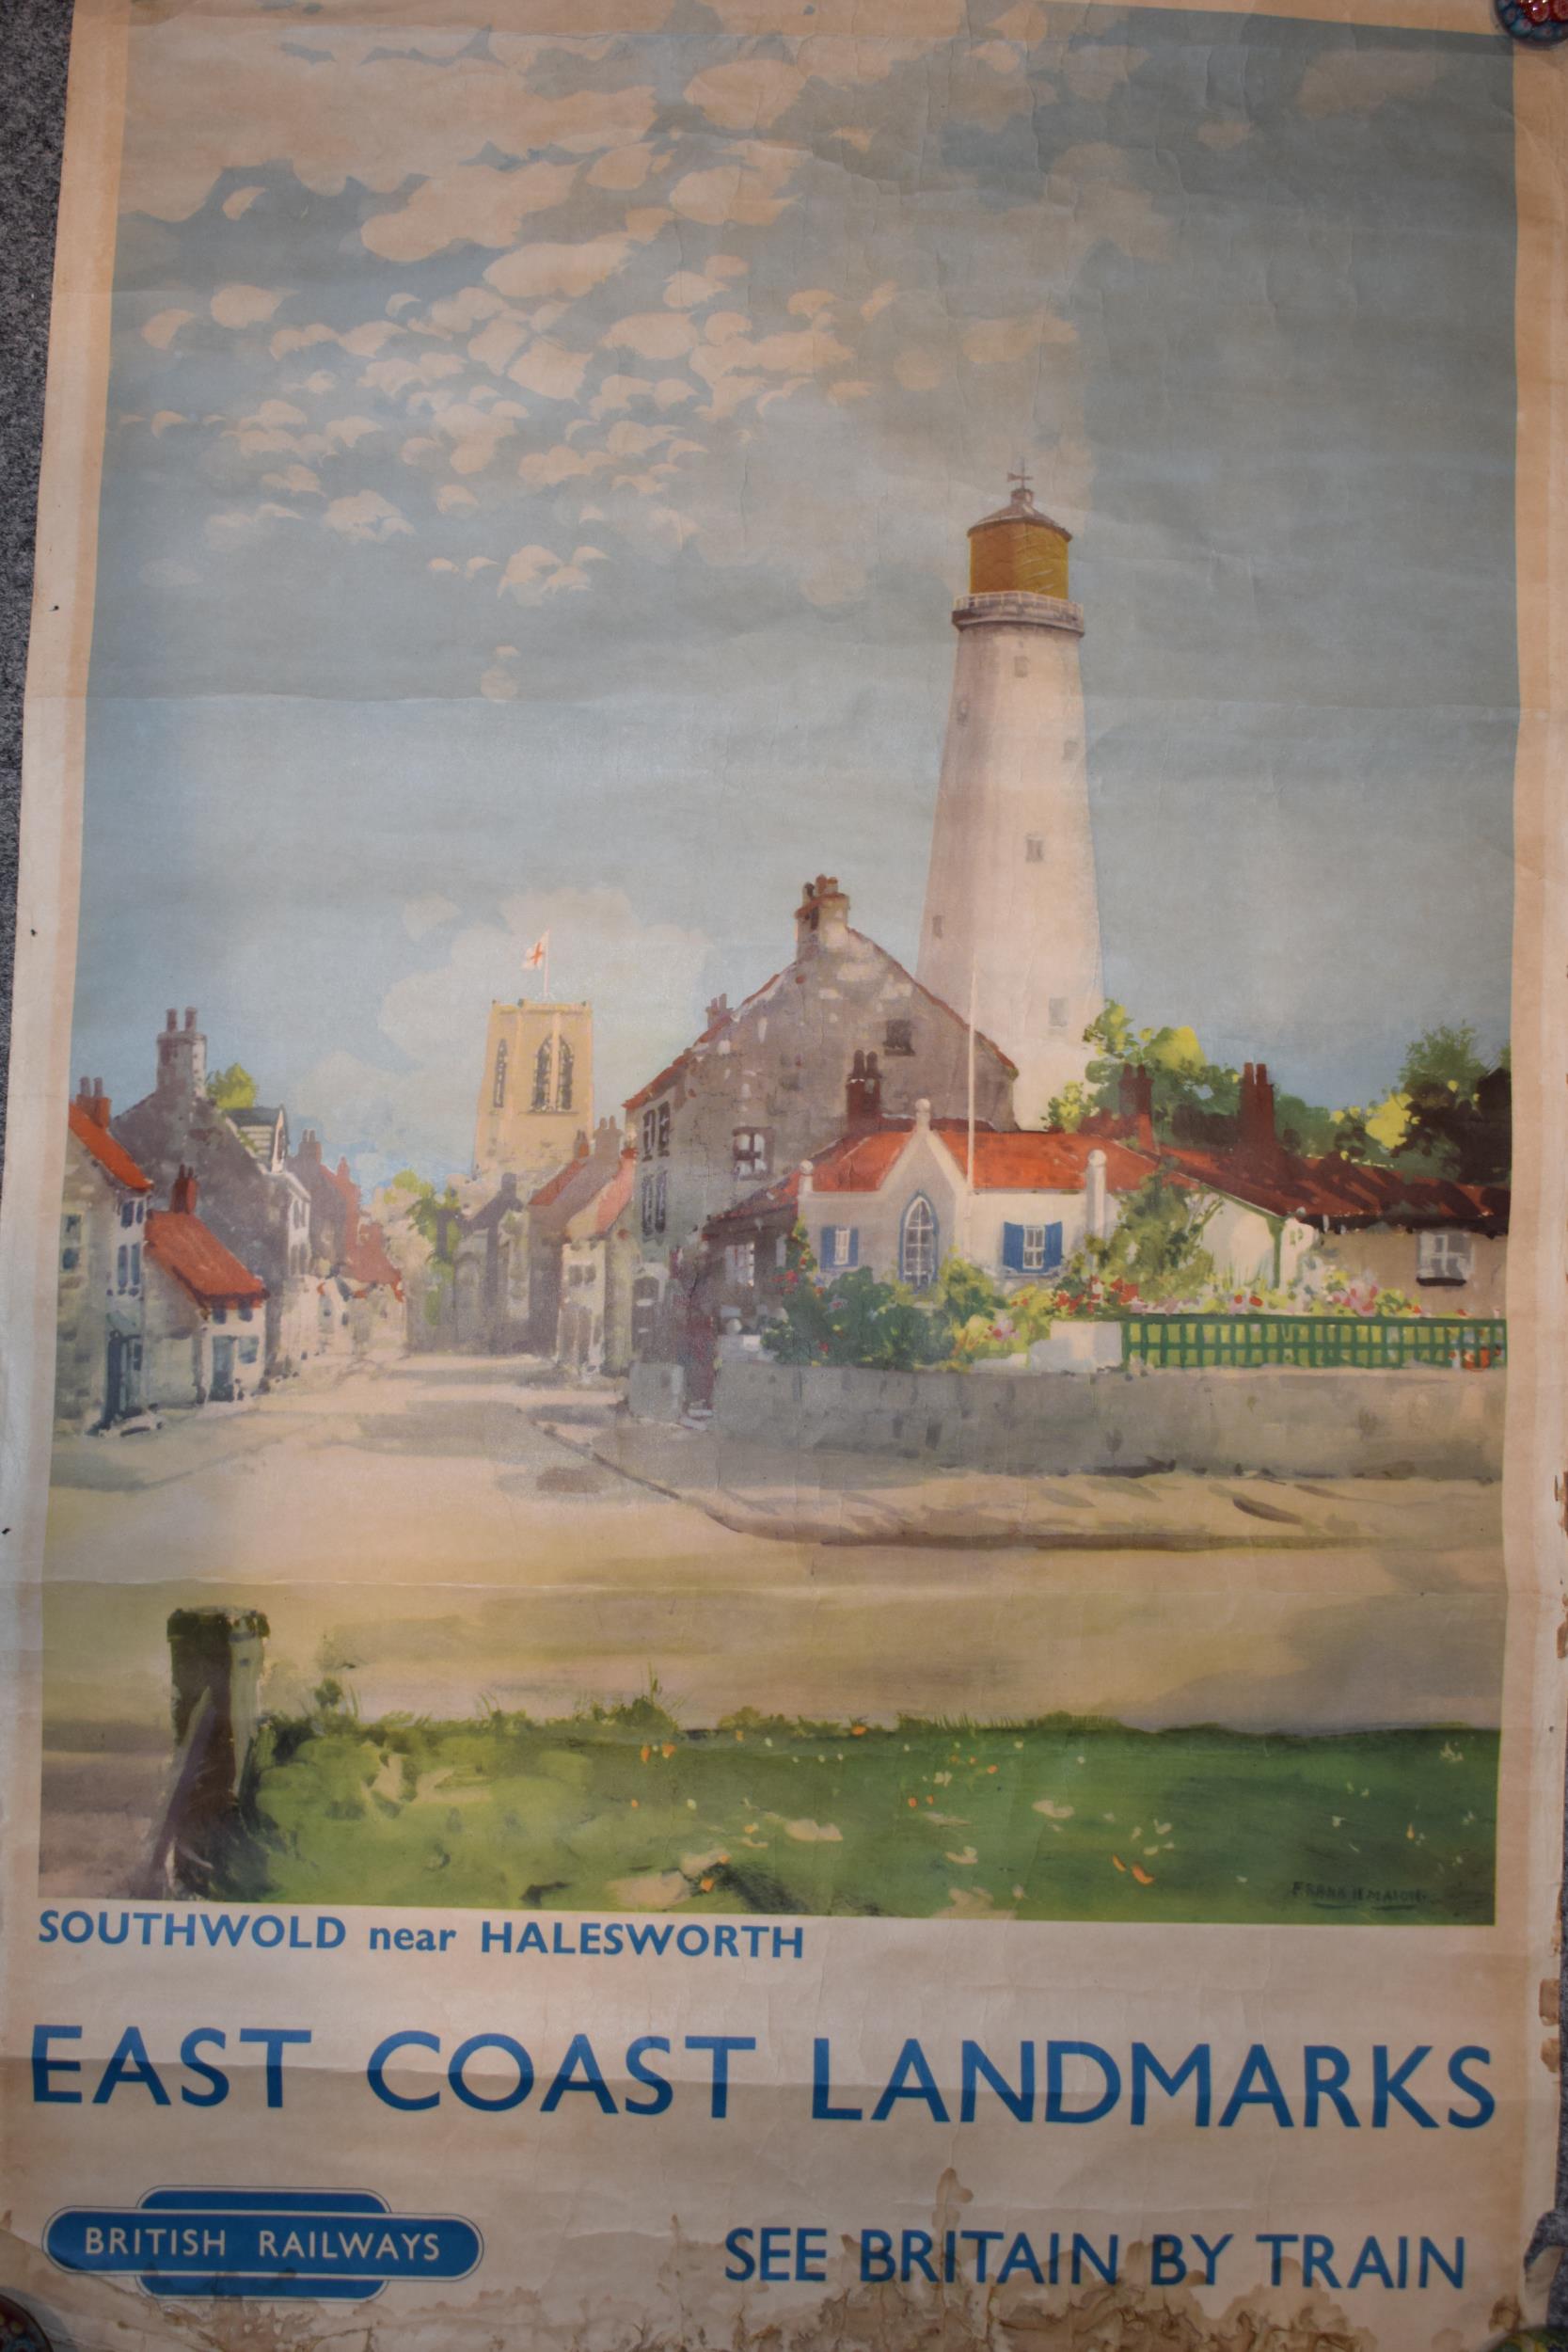 'British Rail' Railway poster 'East Coast Landmarks' 'Southwold near Halesworth' by 'Frank H